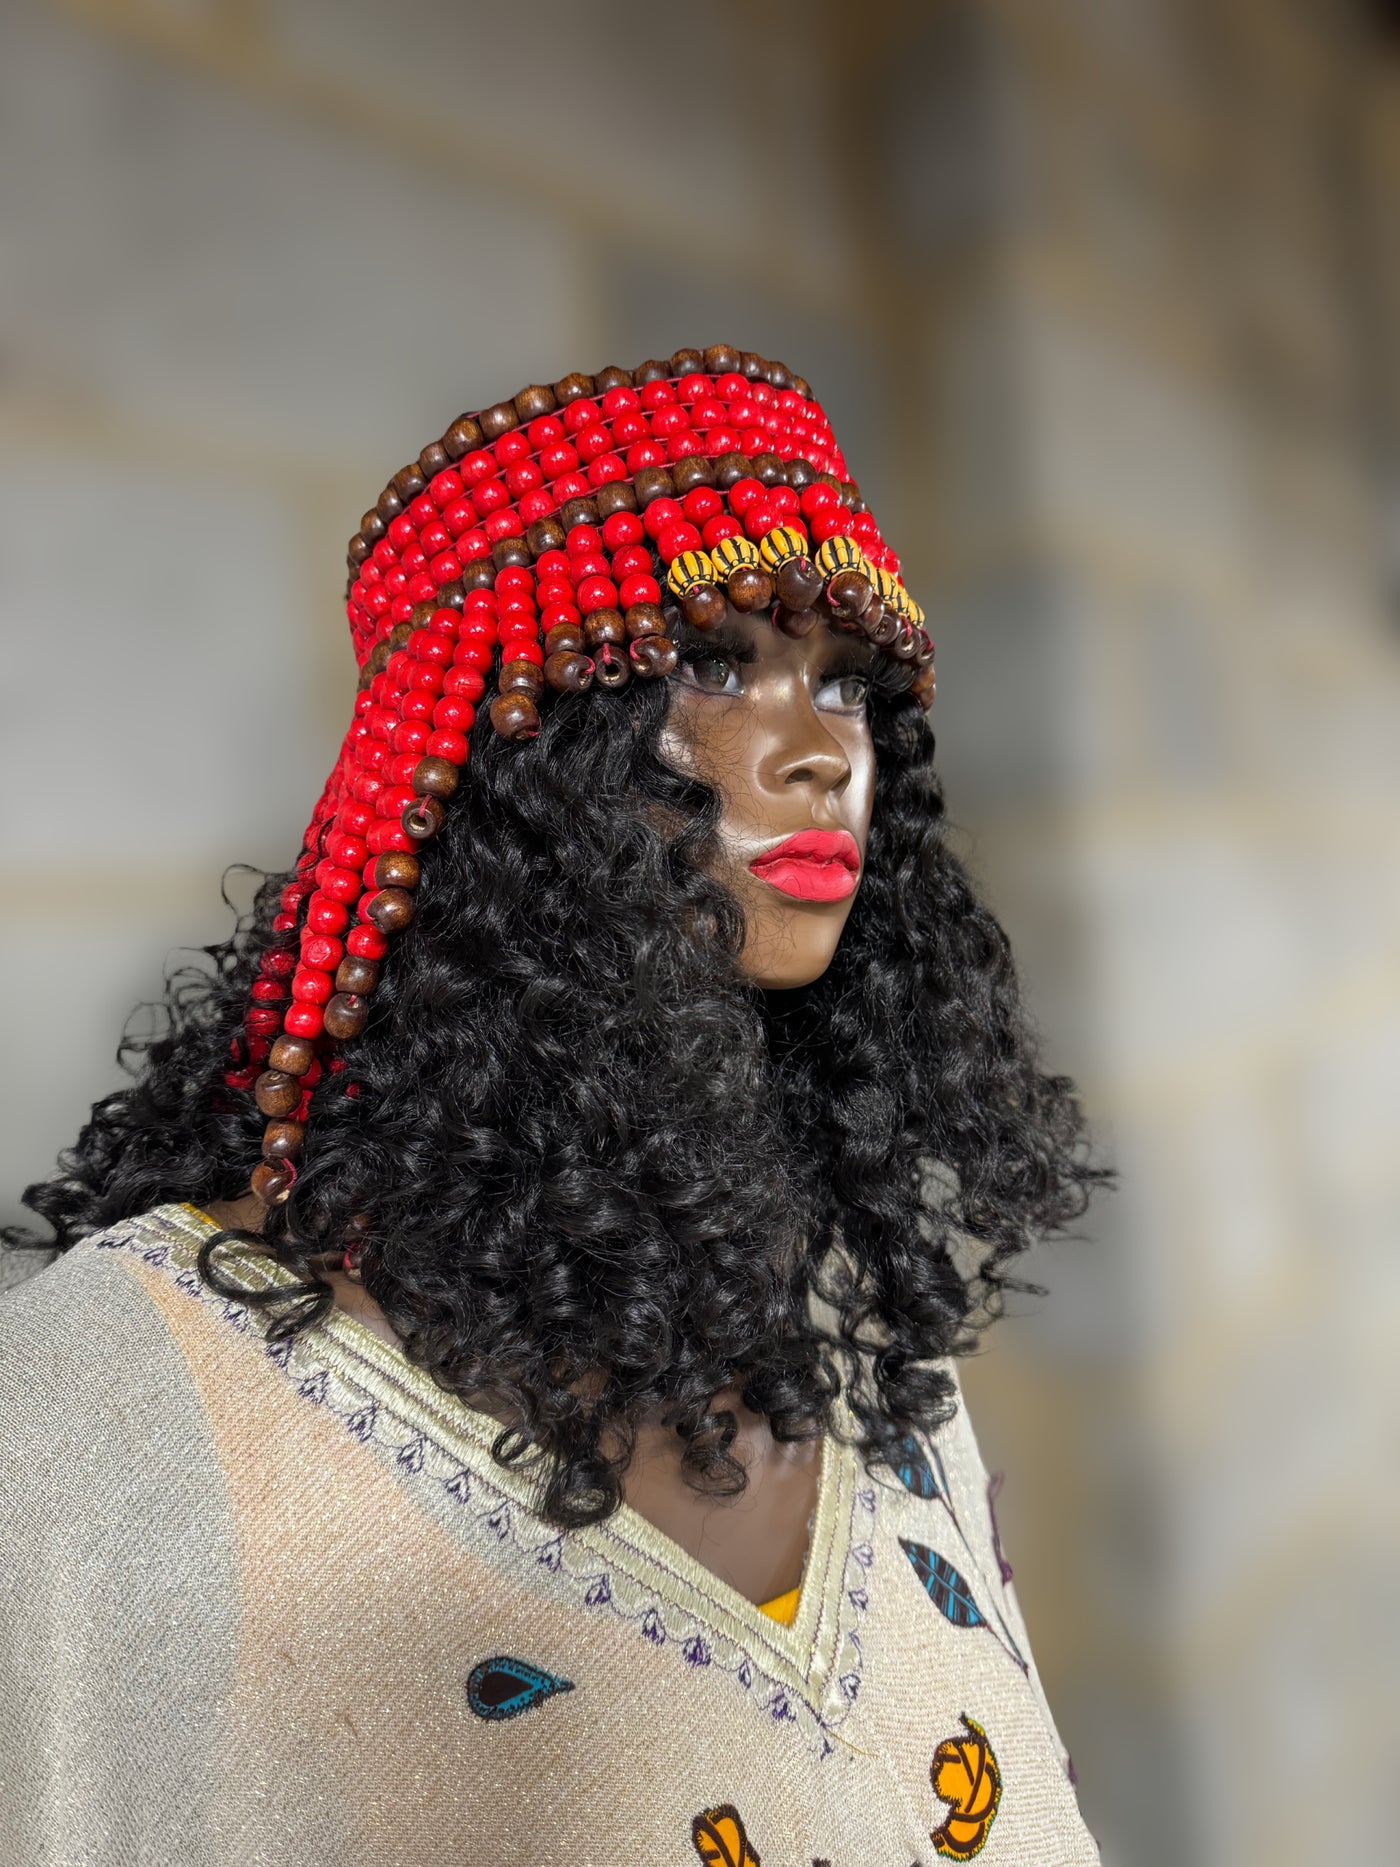 Queen of Egypt Wooden beads Headpiece